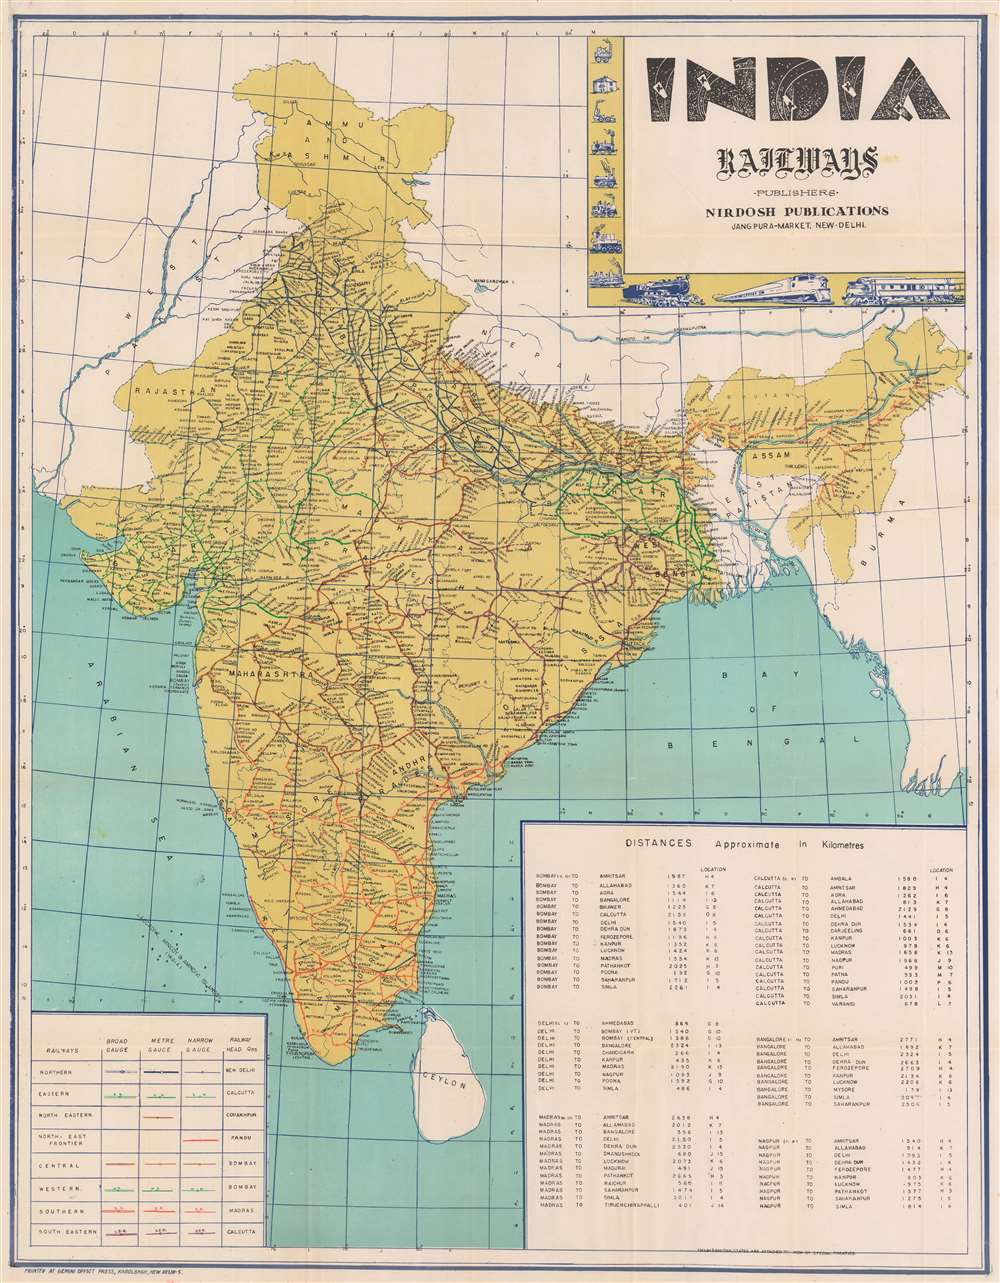 1960 Nirdosh Publications Railroad Map of India